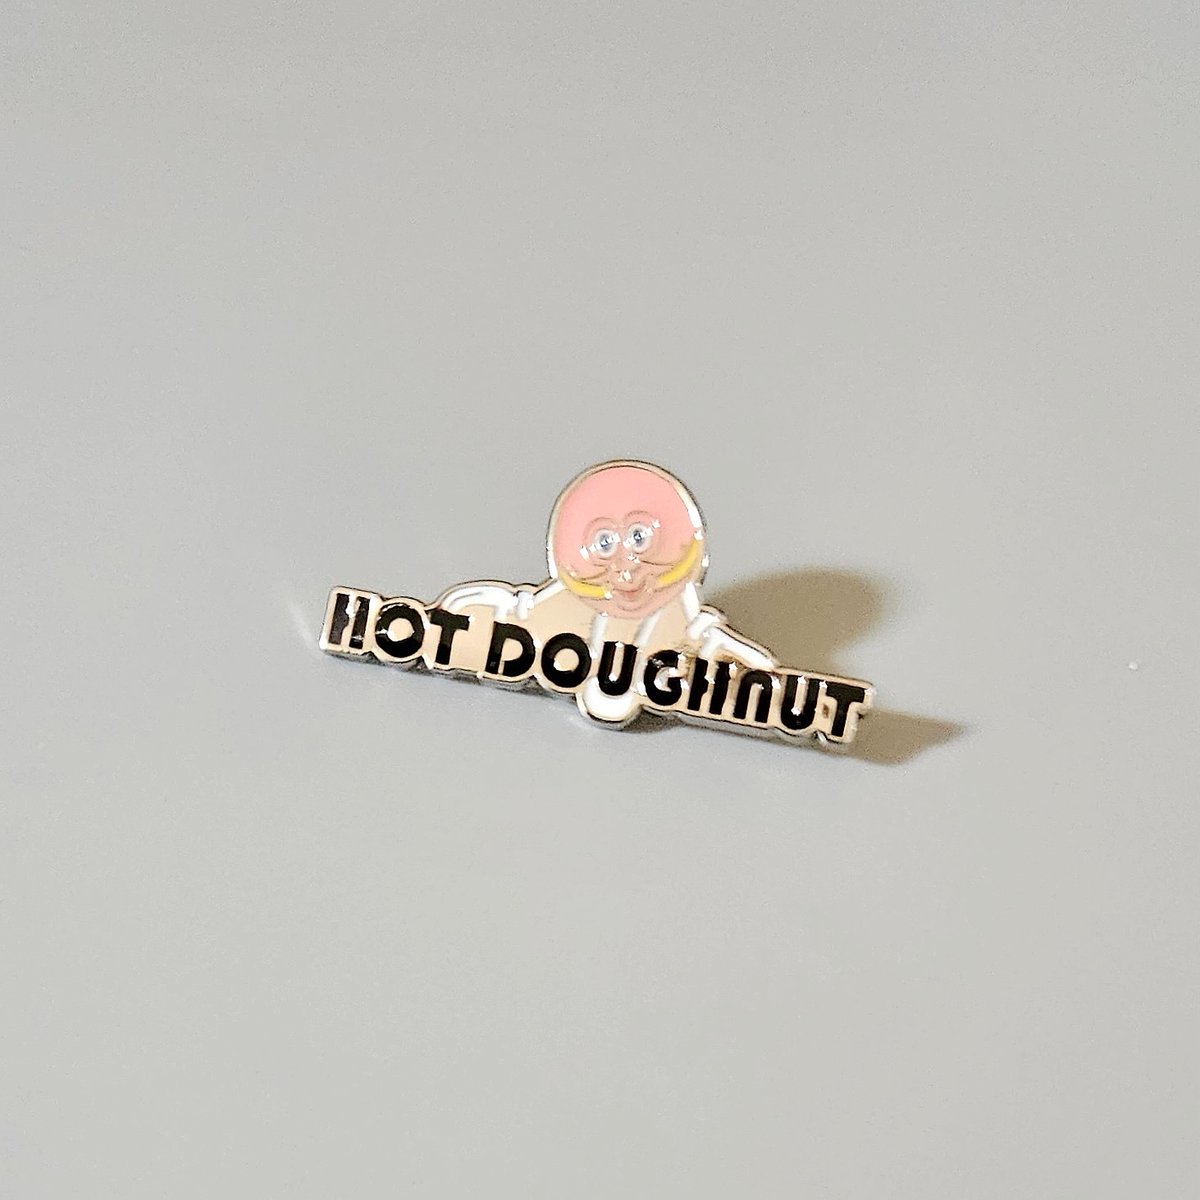 Soft enamel pinbadges 🥯

#pinbadges #pins #badges #enamelpins #enamelpinbadges #enamelbadges #pindesign #pinlover #lapelpin #Custompins #pinaddict #enamel #enamelhappy #custombadges #pincollector #doughnut #hotdoughnut